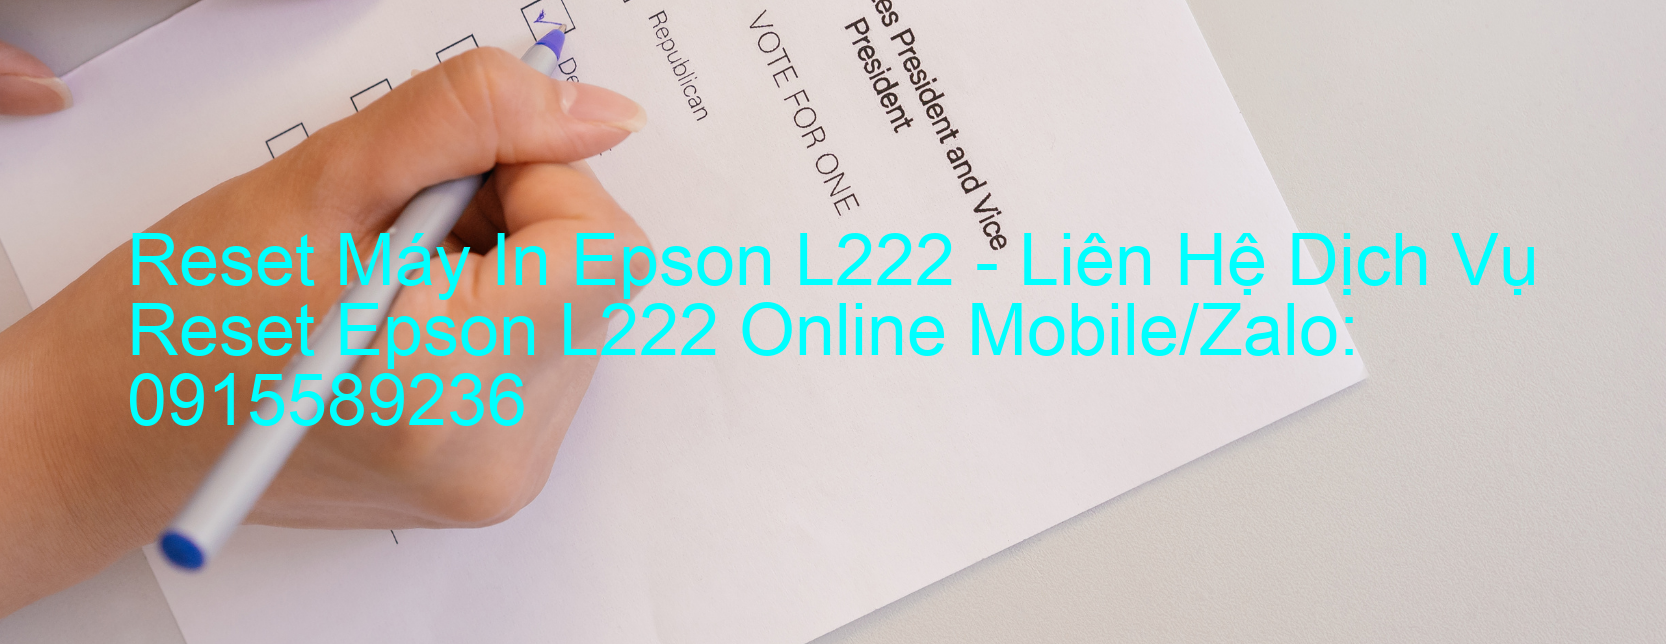 Reset Máy In Epson L222 Online